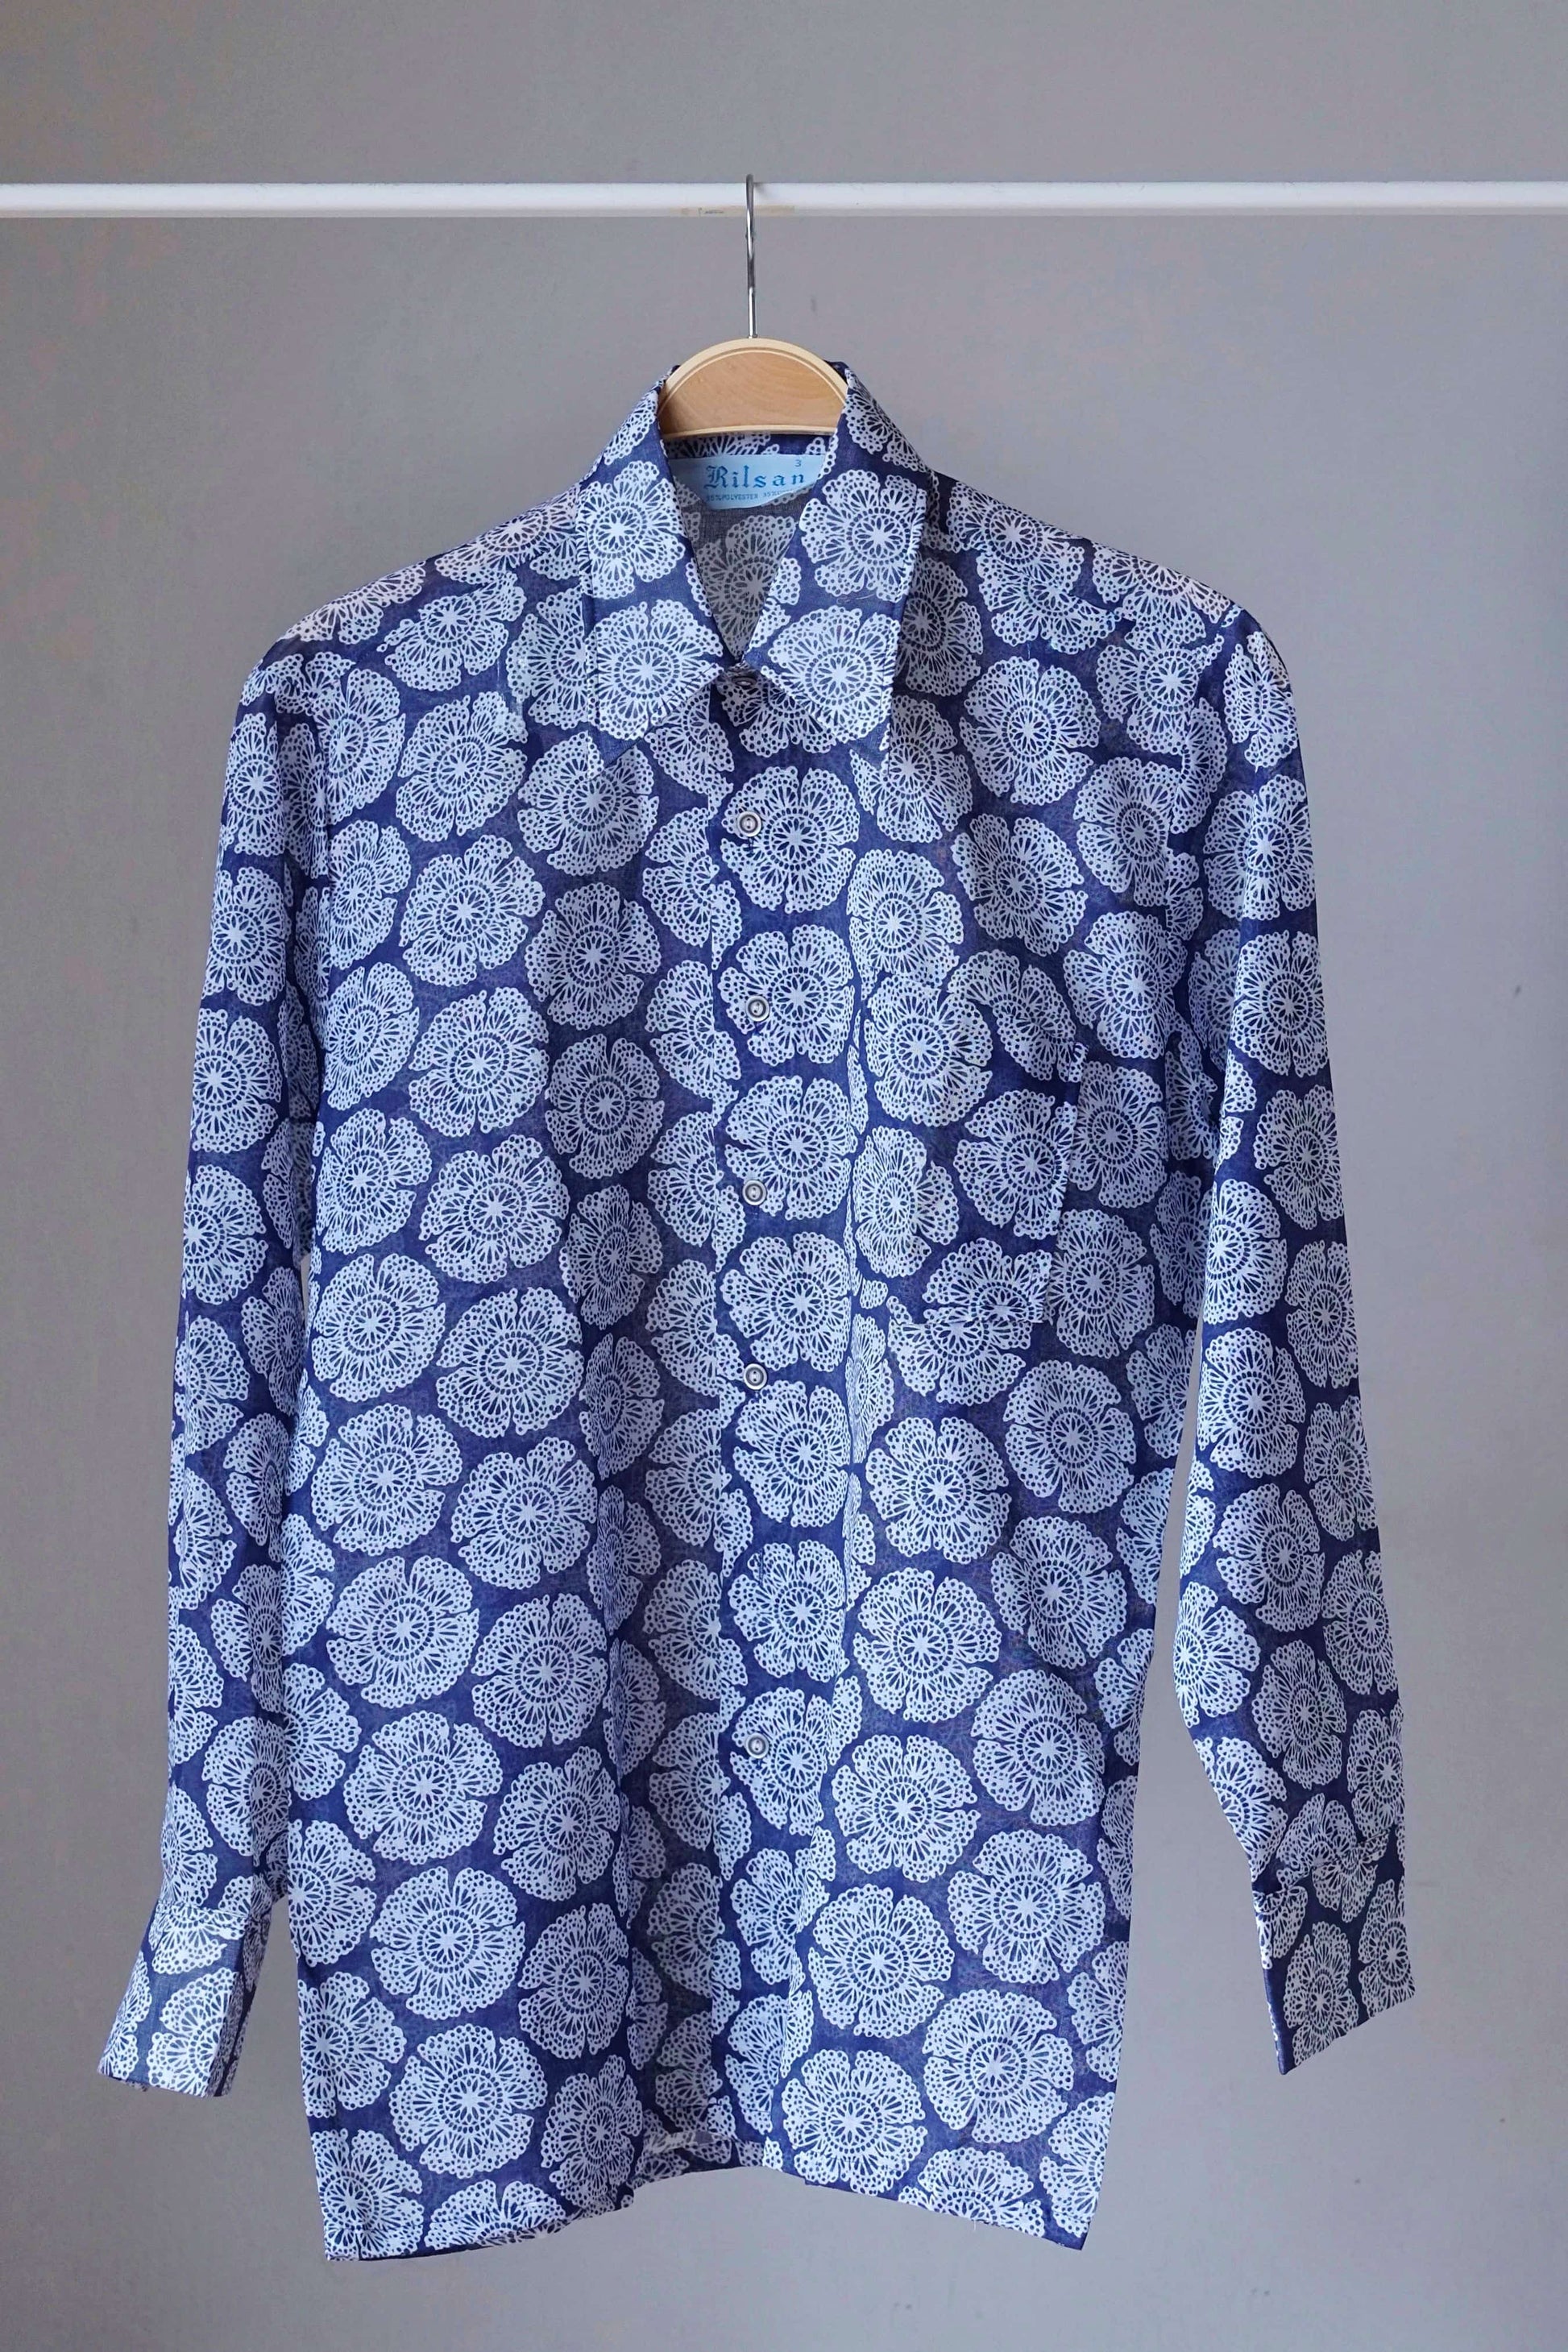 vintage flower print long sleeves 70s shirt navy